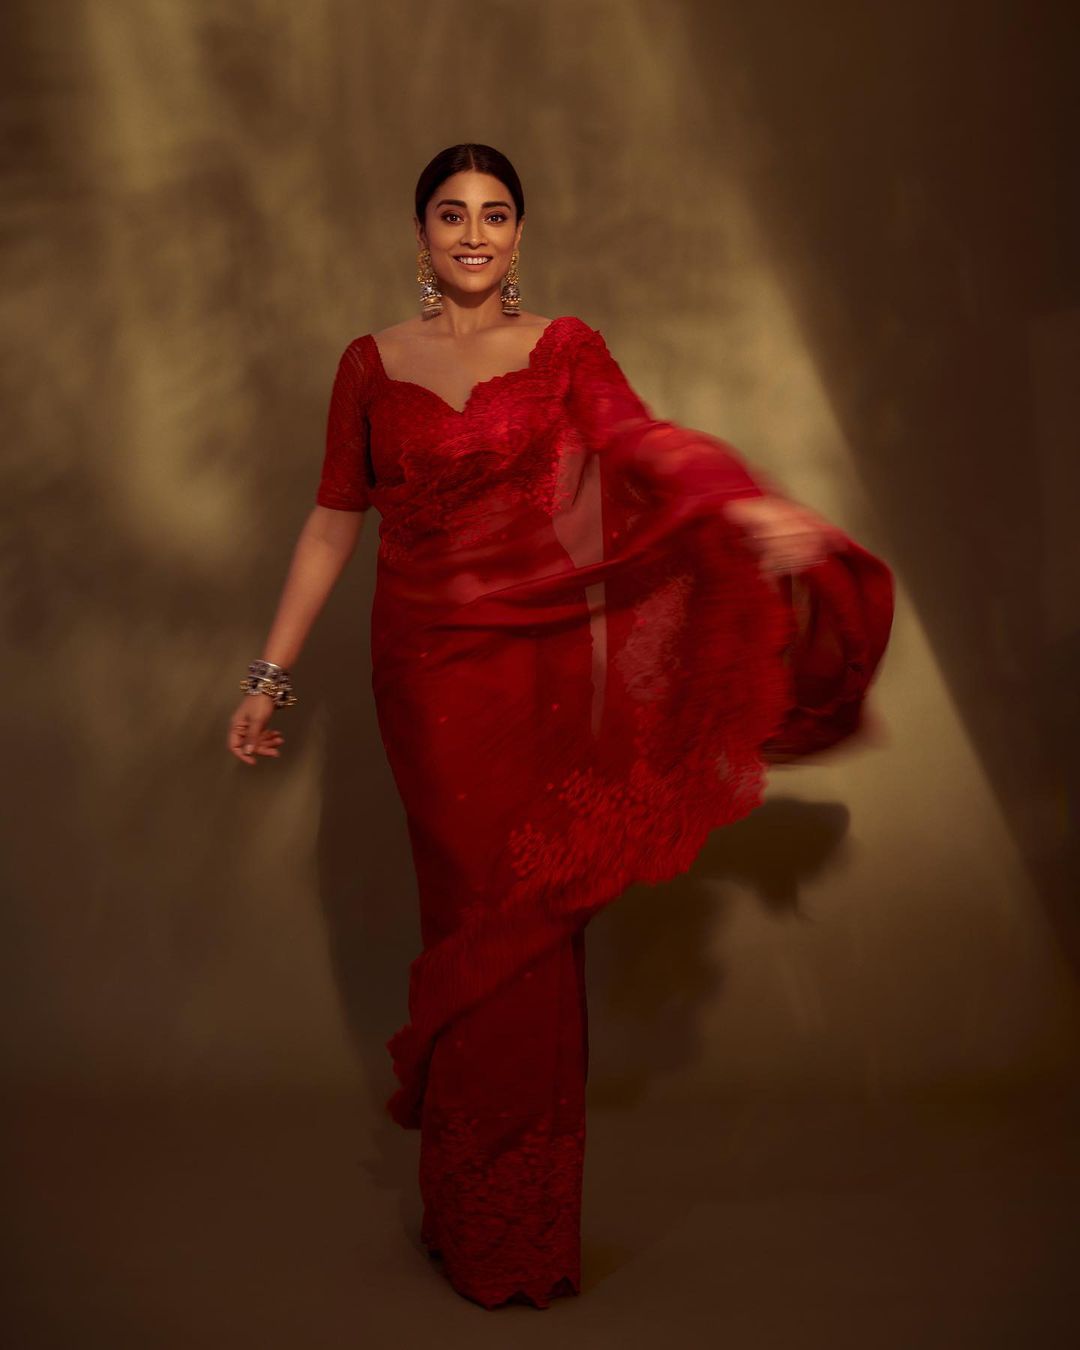 The Dishryam 2 actress Shriya Saran exudes elegance in a red saree